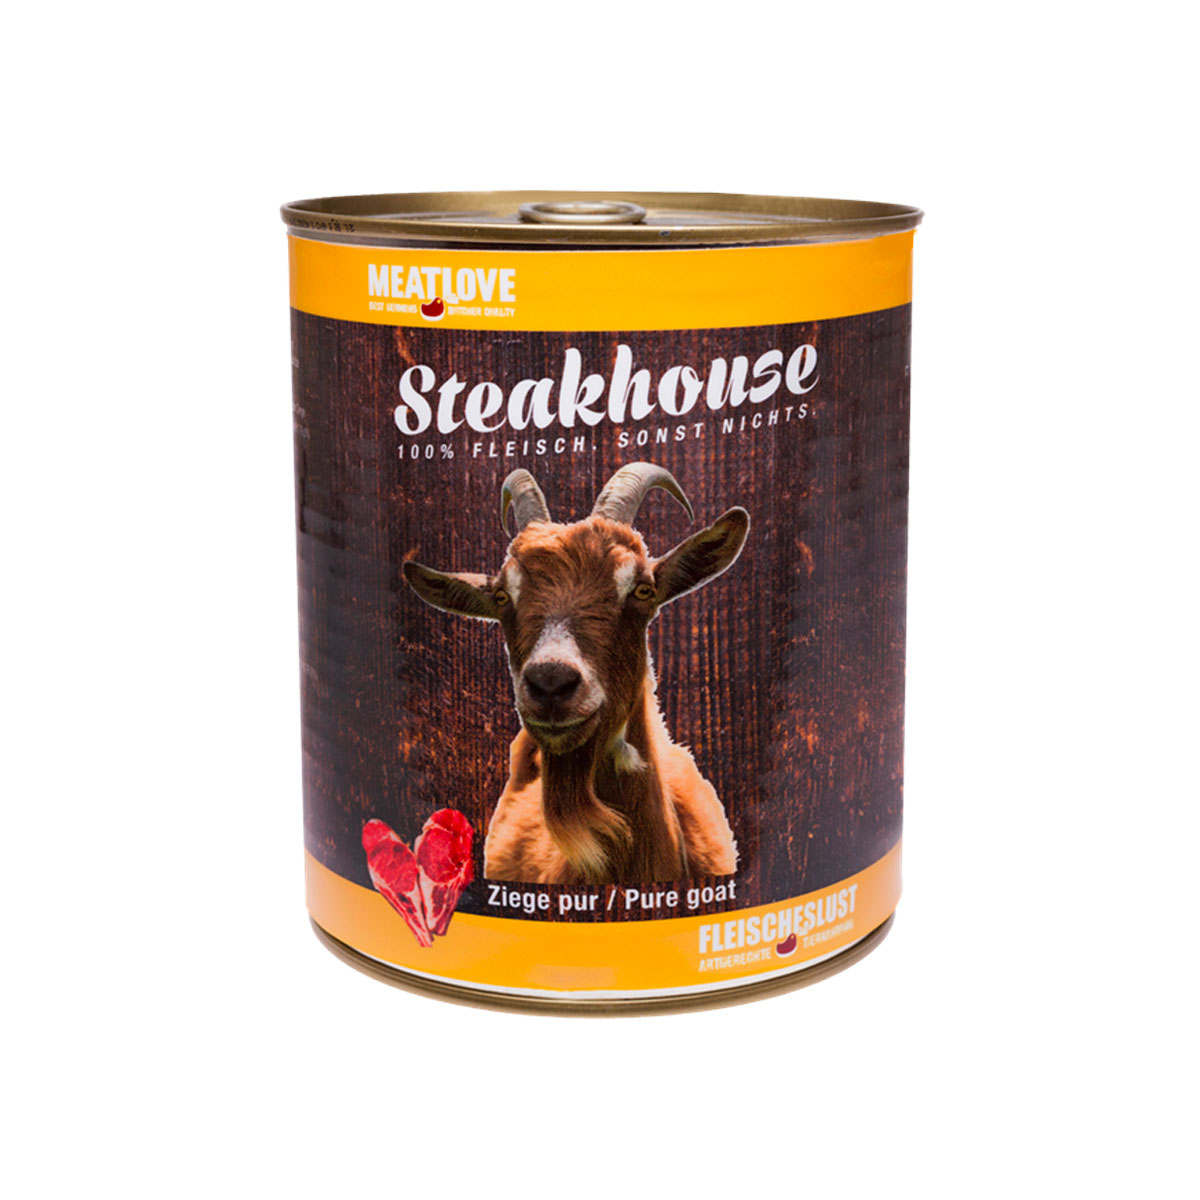 Steakhouse Ziege pur 400g / 800g Dose Hunde Nassfutter 100% Fleisch